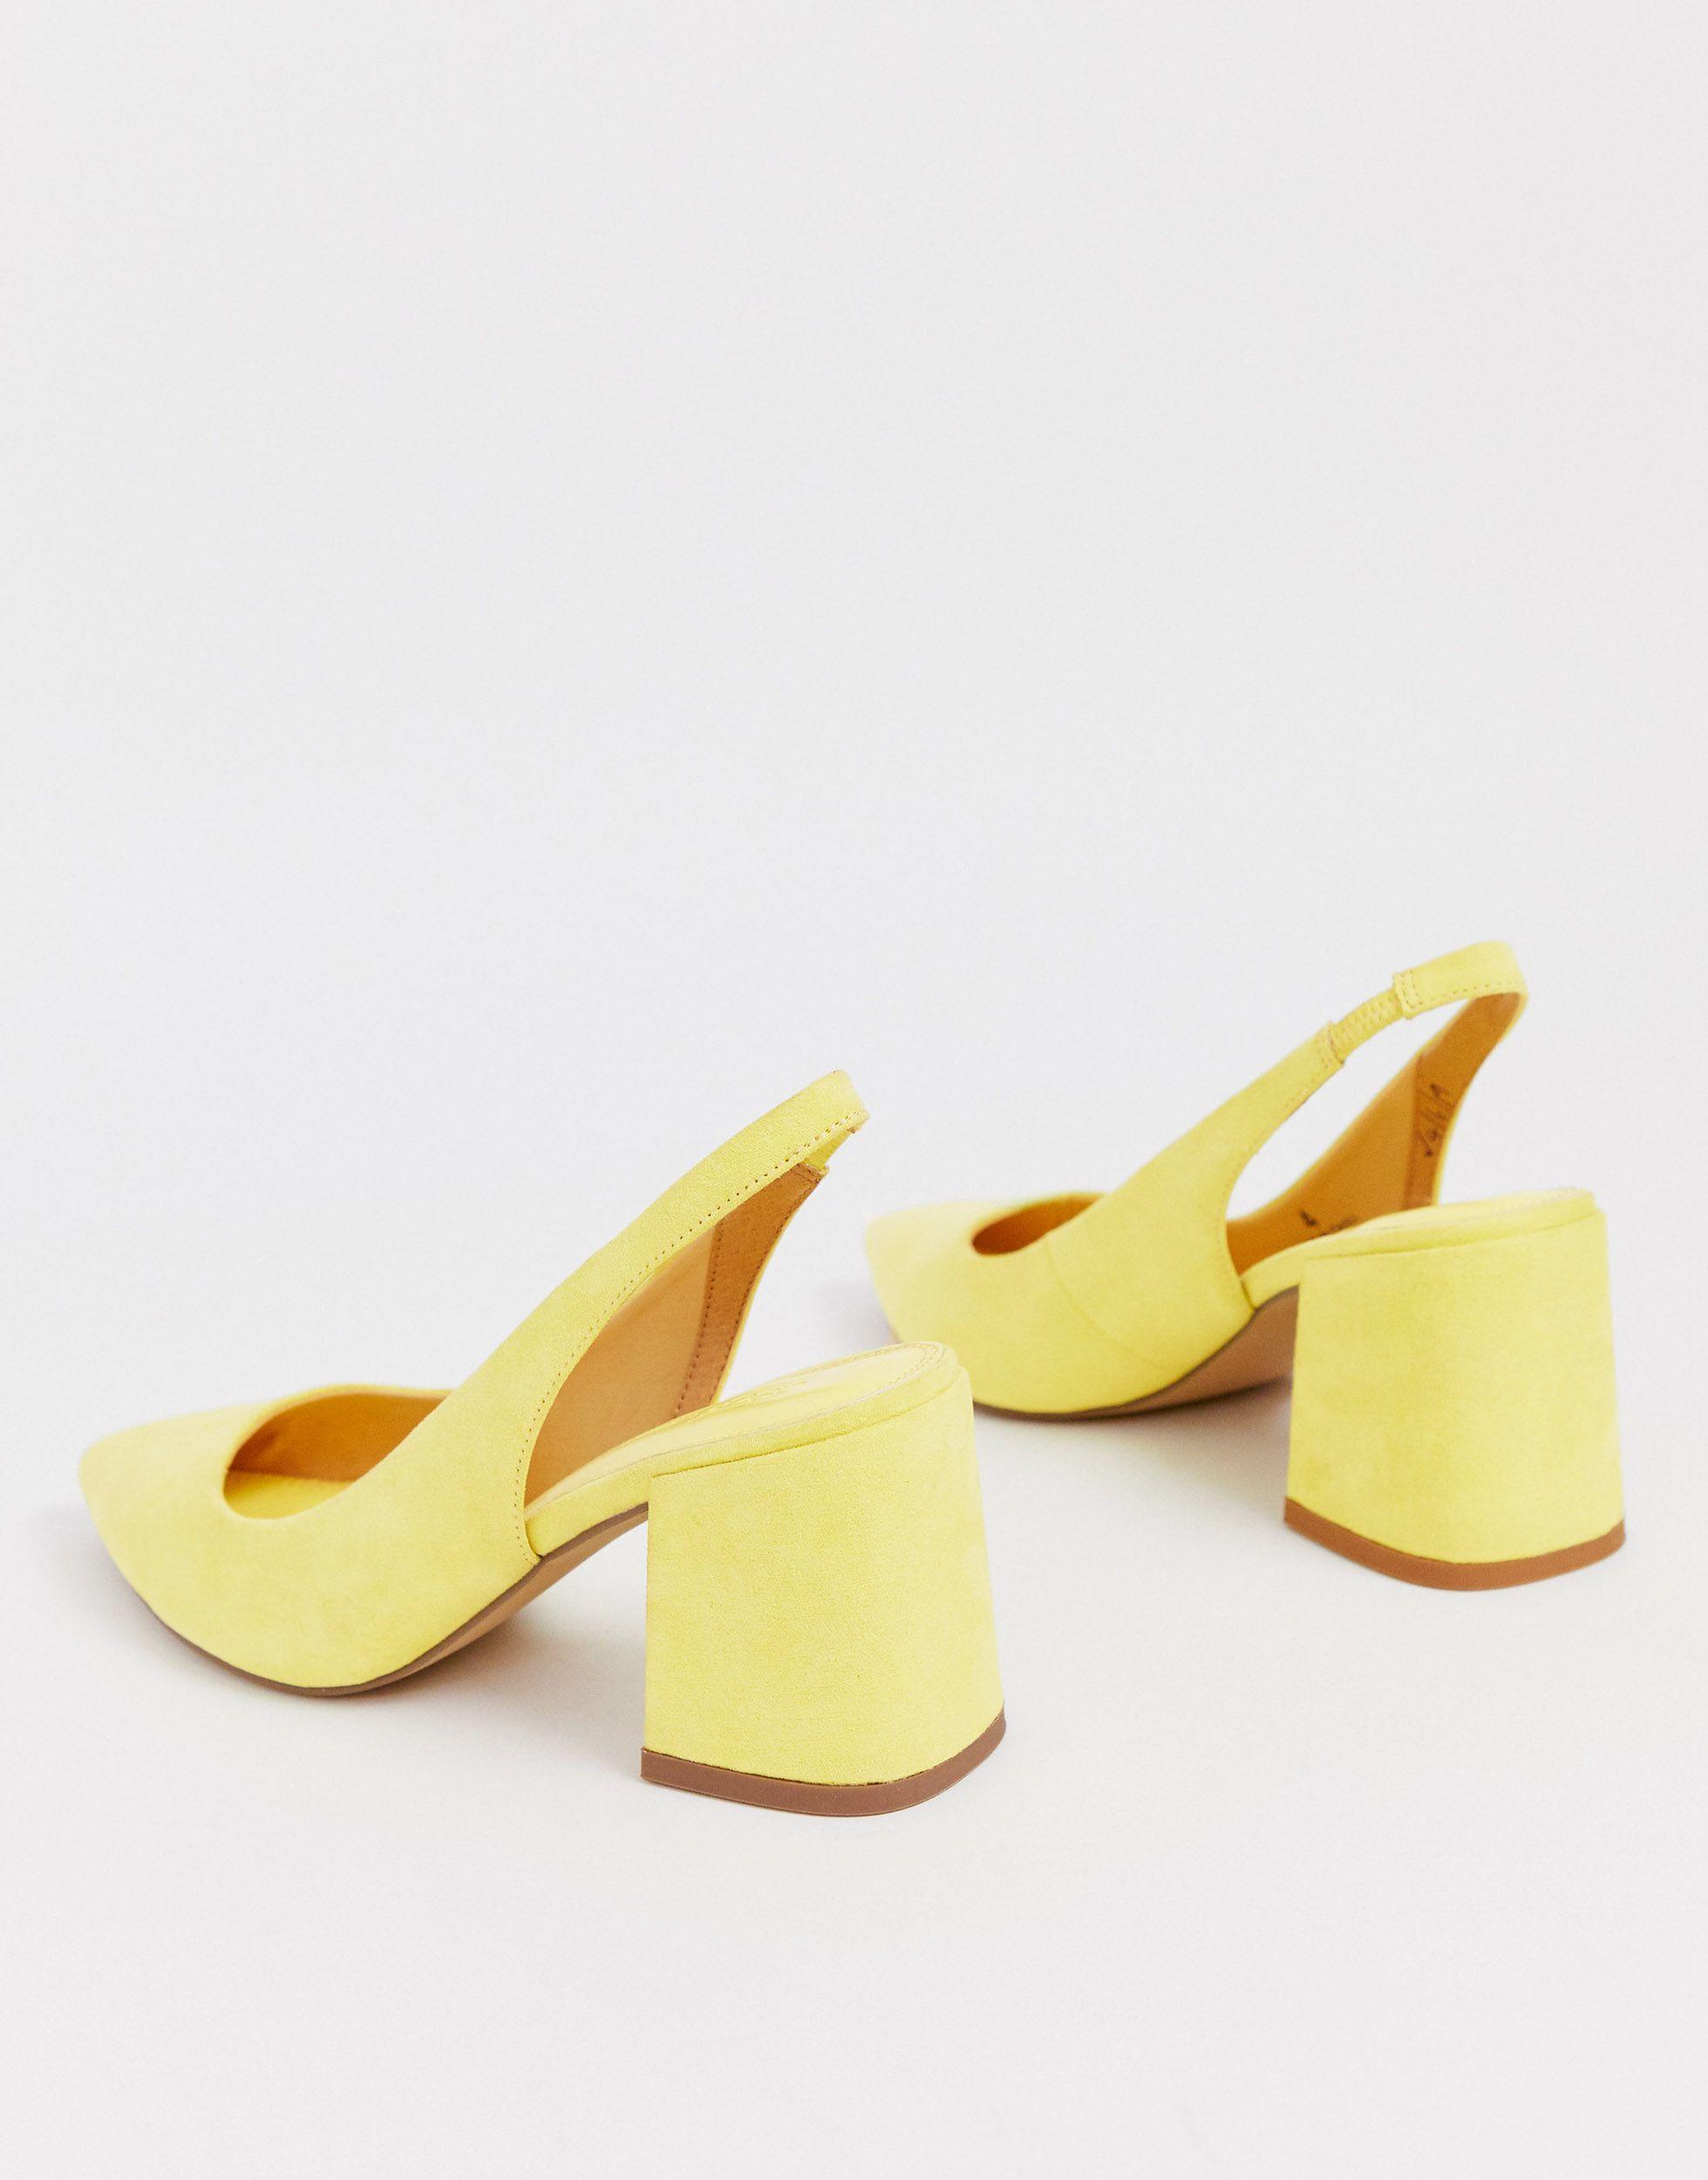 Emilio Pucci Pink / Yellow Satin Slingback Heels 36.5 | luxequarter.com